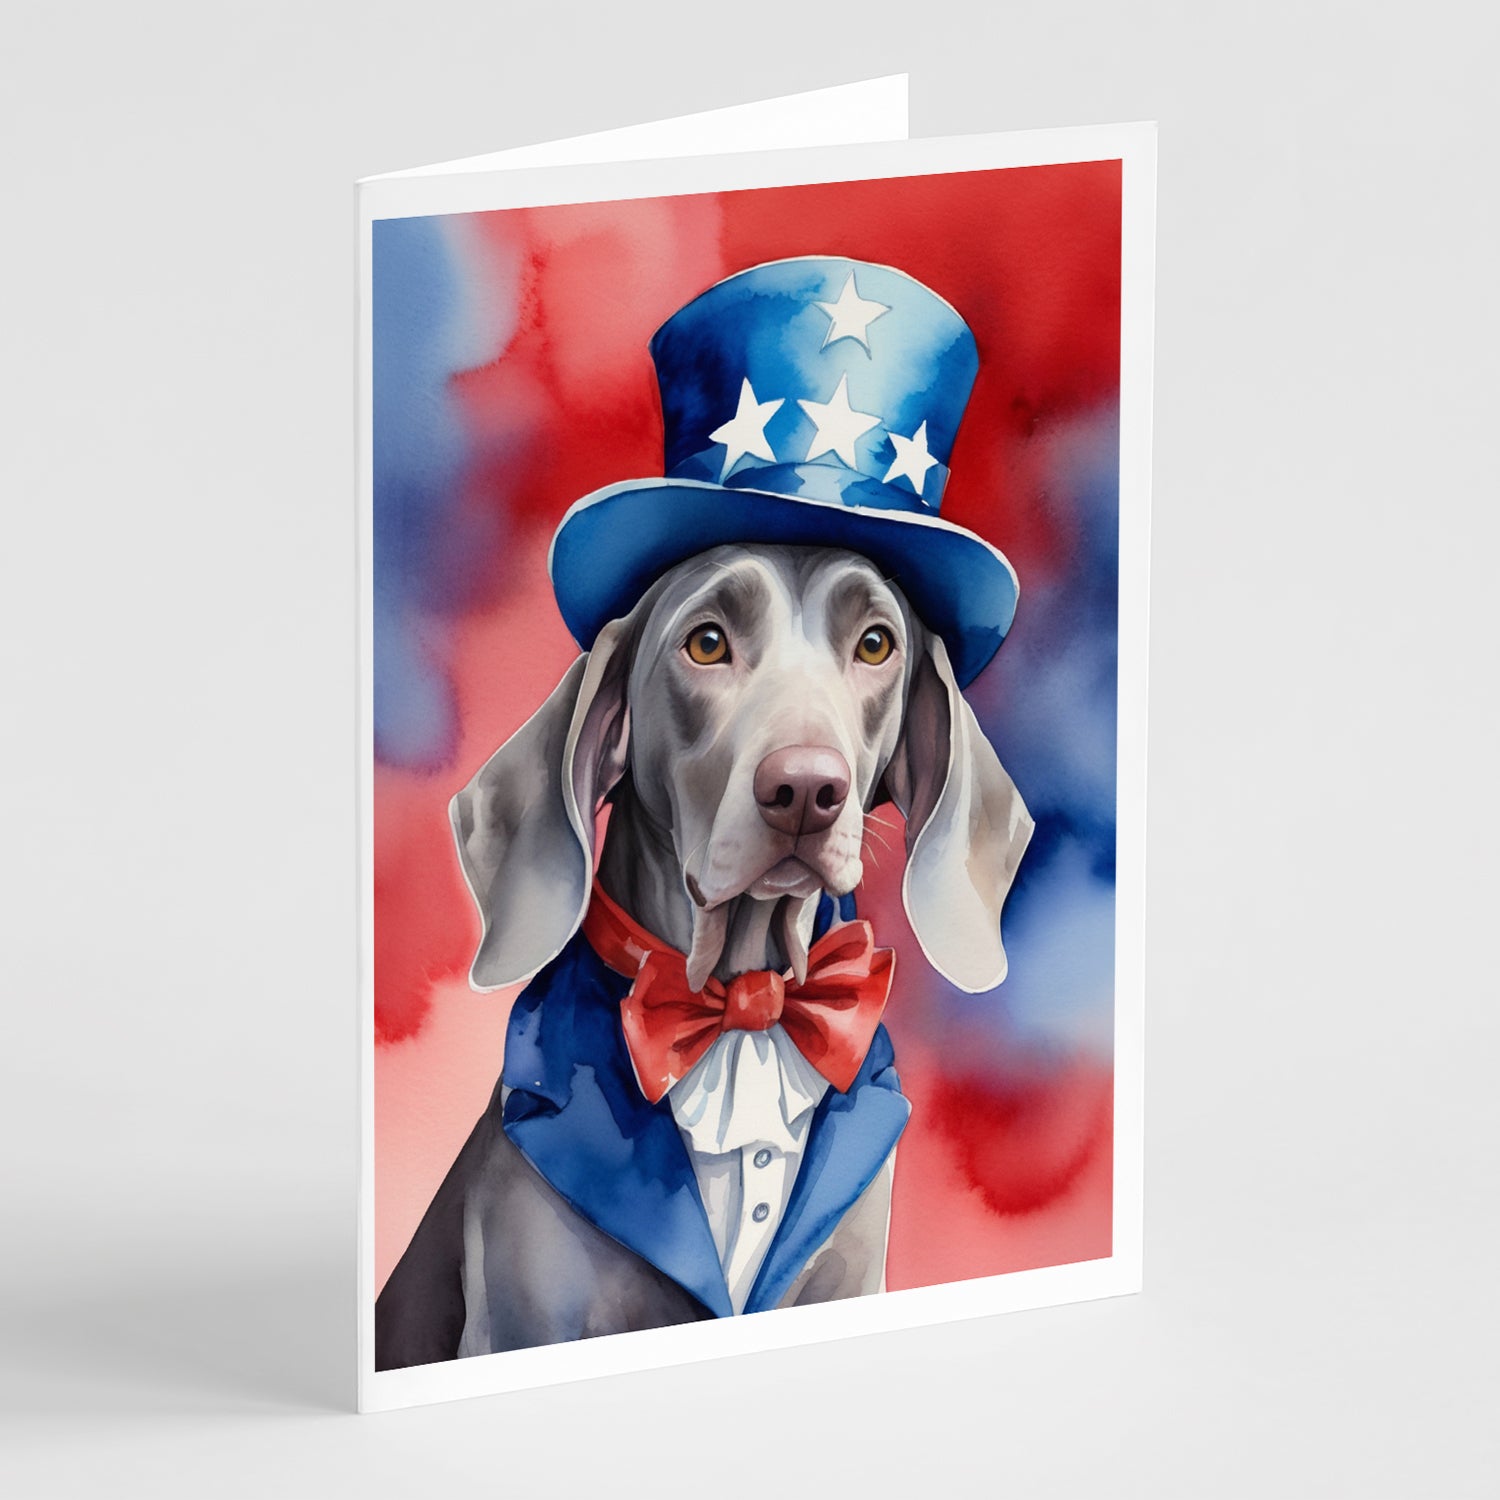 Buy this Weimaraner Patriotic American Greeting Cards Pack of 8